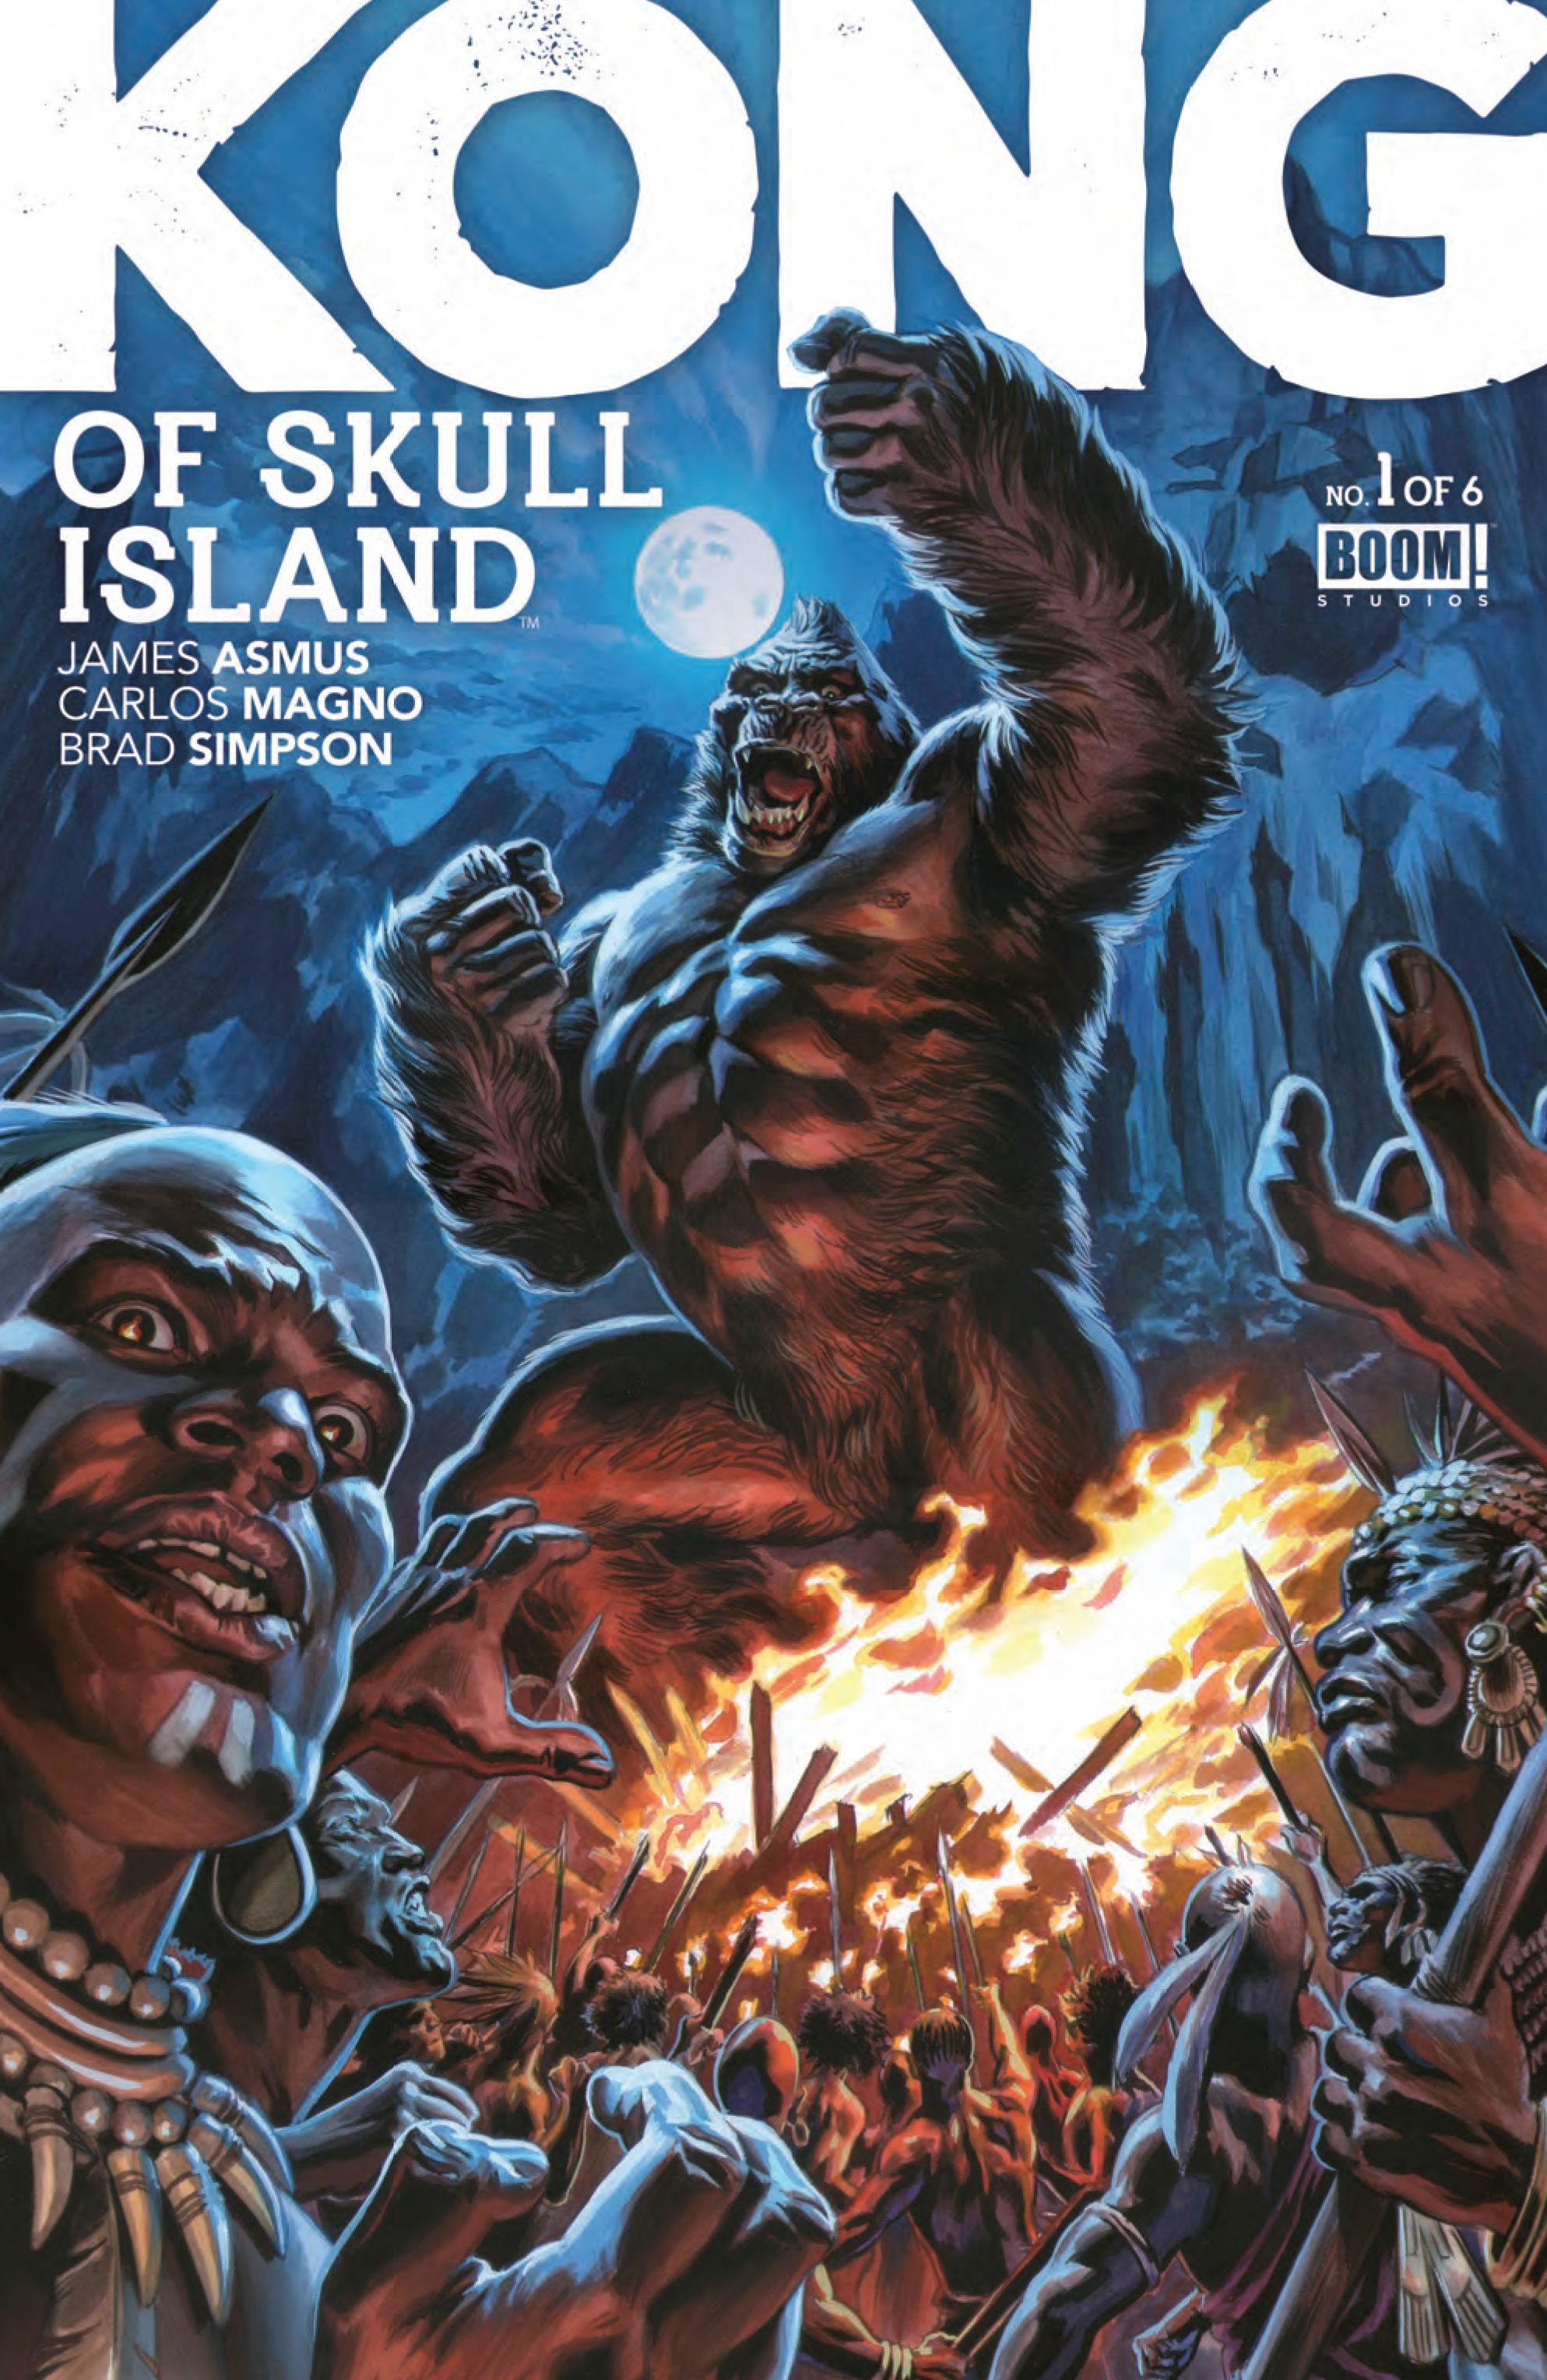 Skull island comic